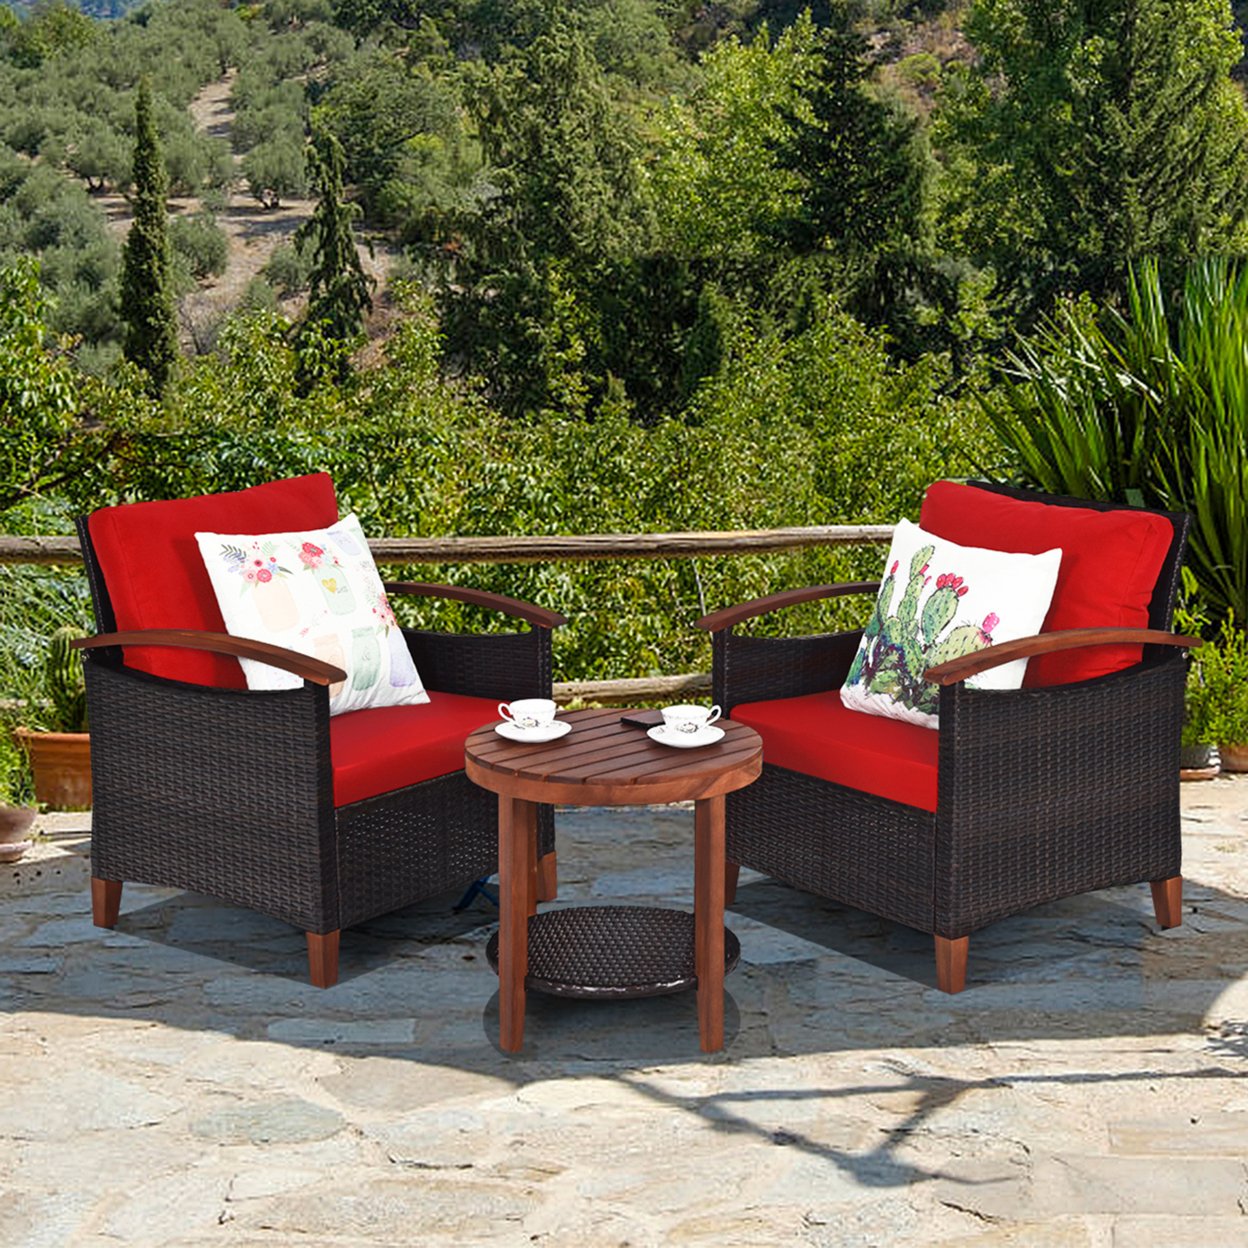 3PCS Patio Wicker Rattan Conversation Set Outdoor Furniture Set W/ Red Cushion